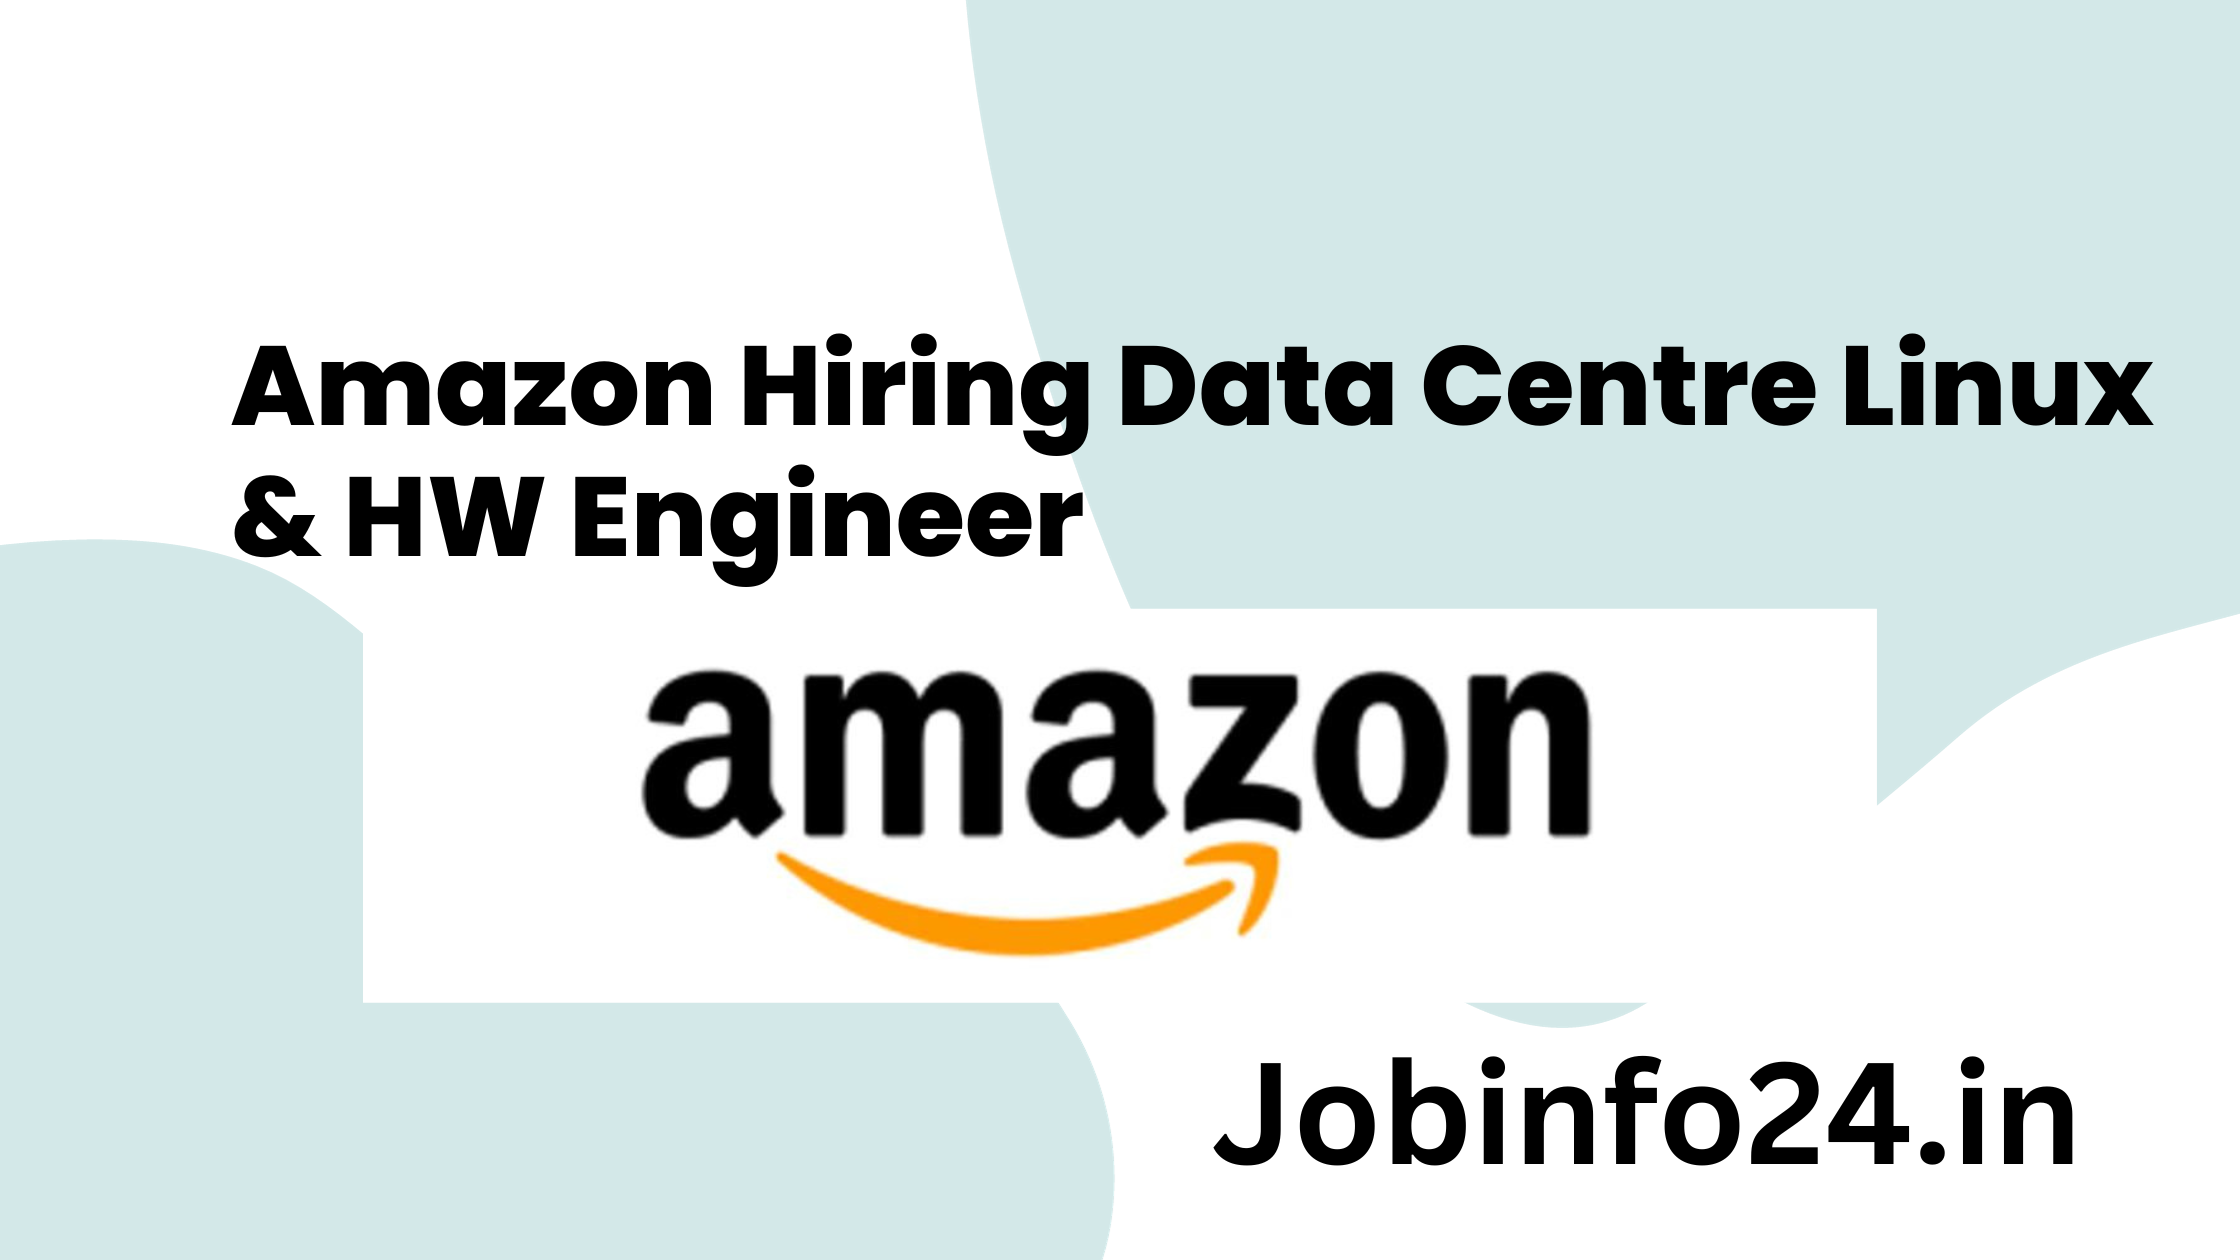 Amazon Hiring Data Centre Linux & HW Engineer